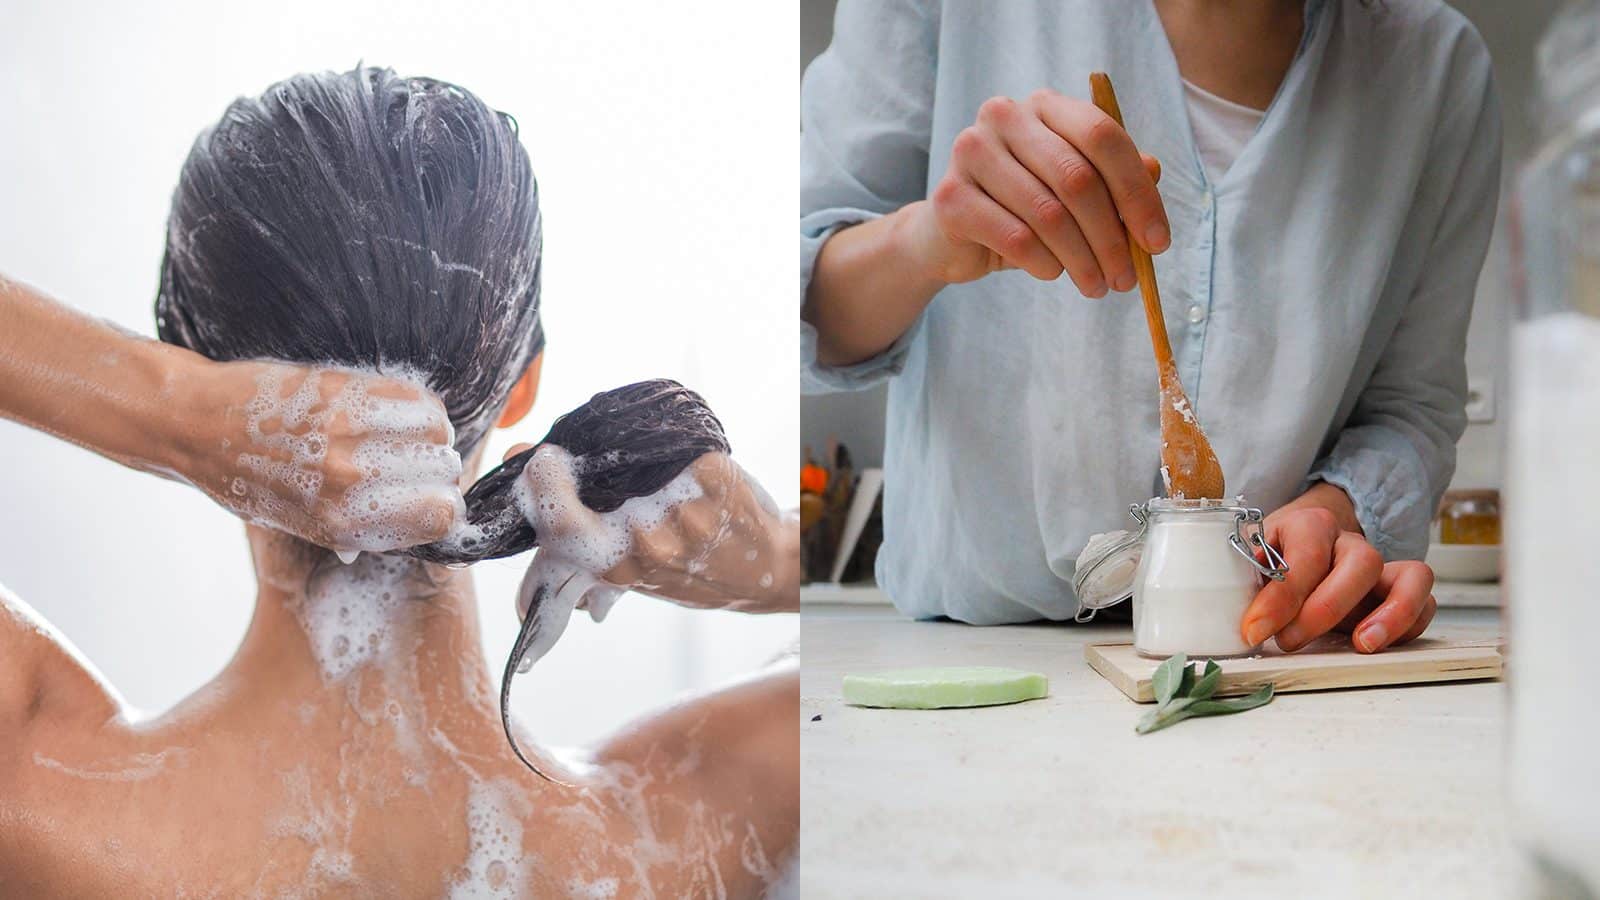 How to Make Chemical-Free Shampoo at Home (3 Recipes)